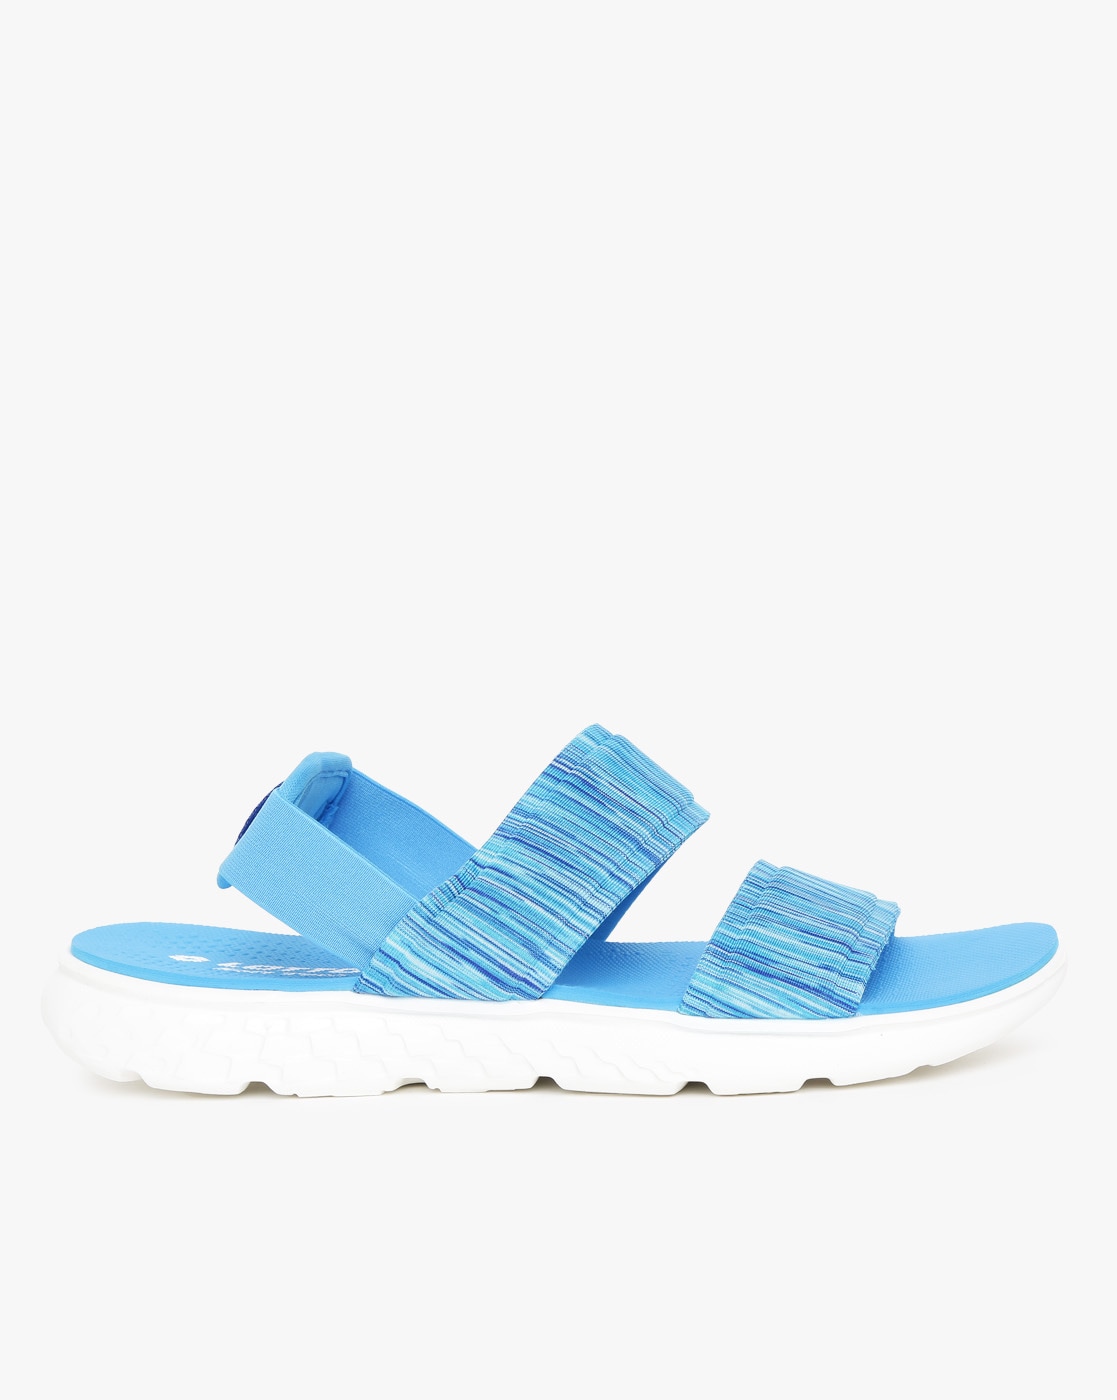 Buy Blue Sports Sandals for Women by LOTTO Online  Ajiocom